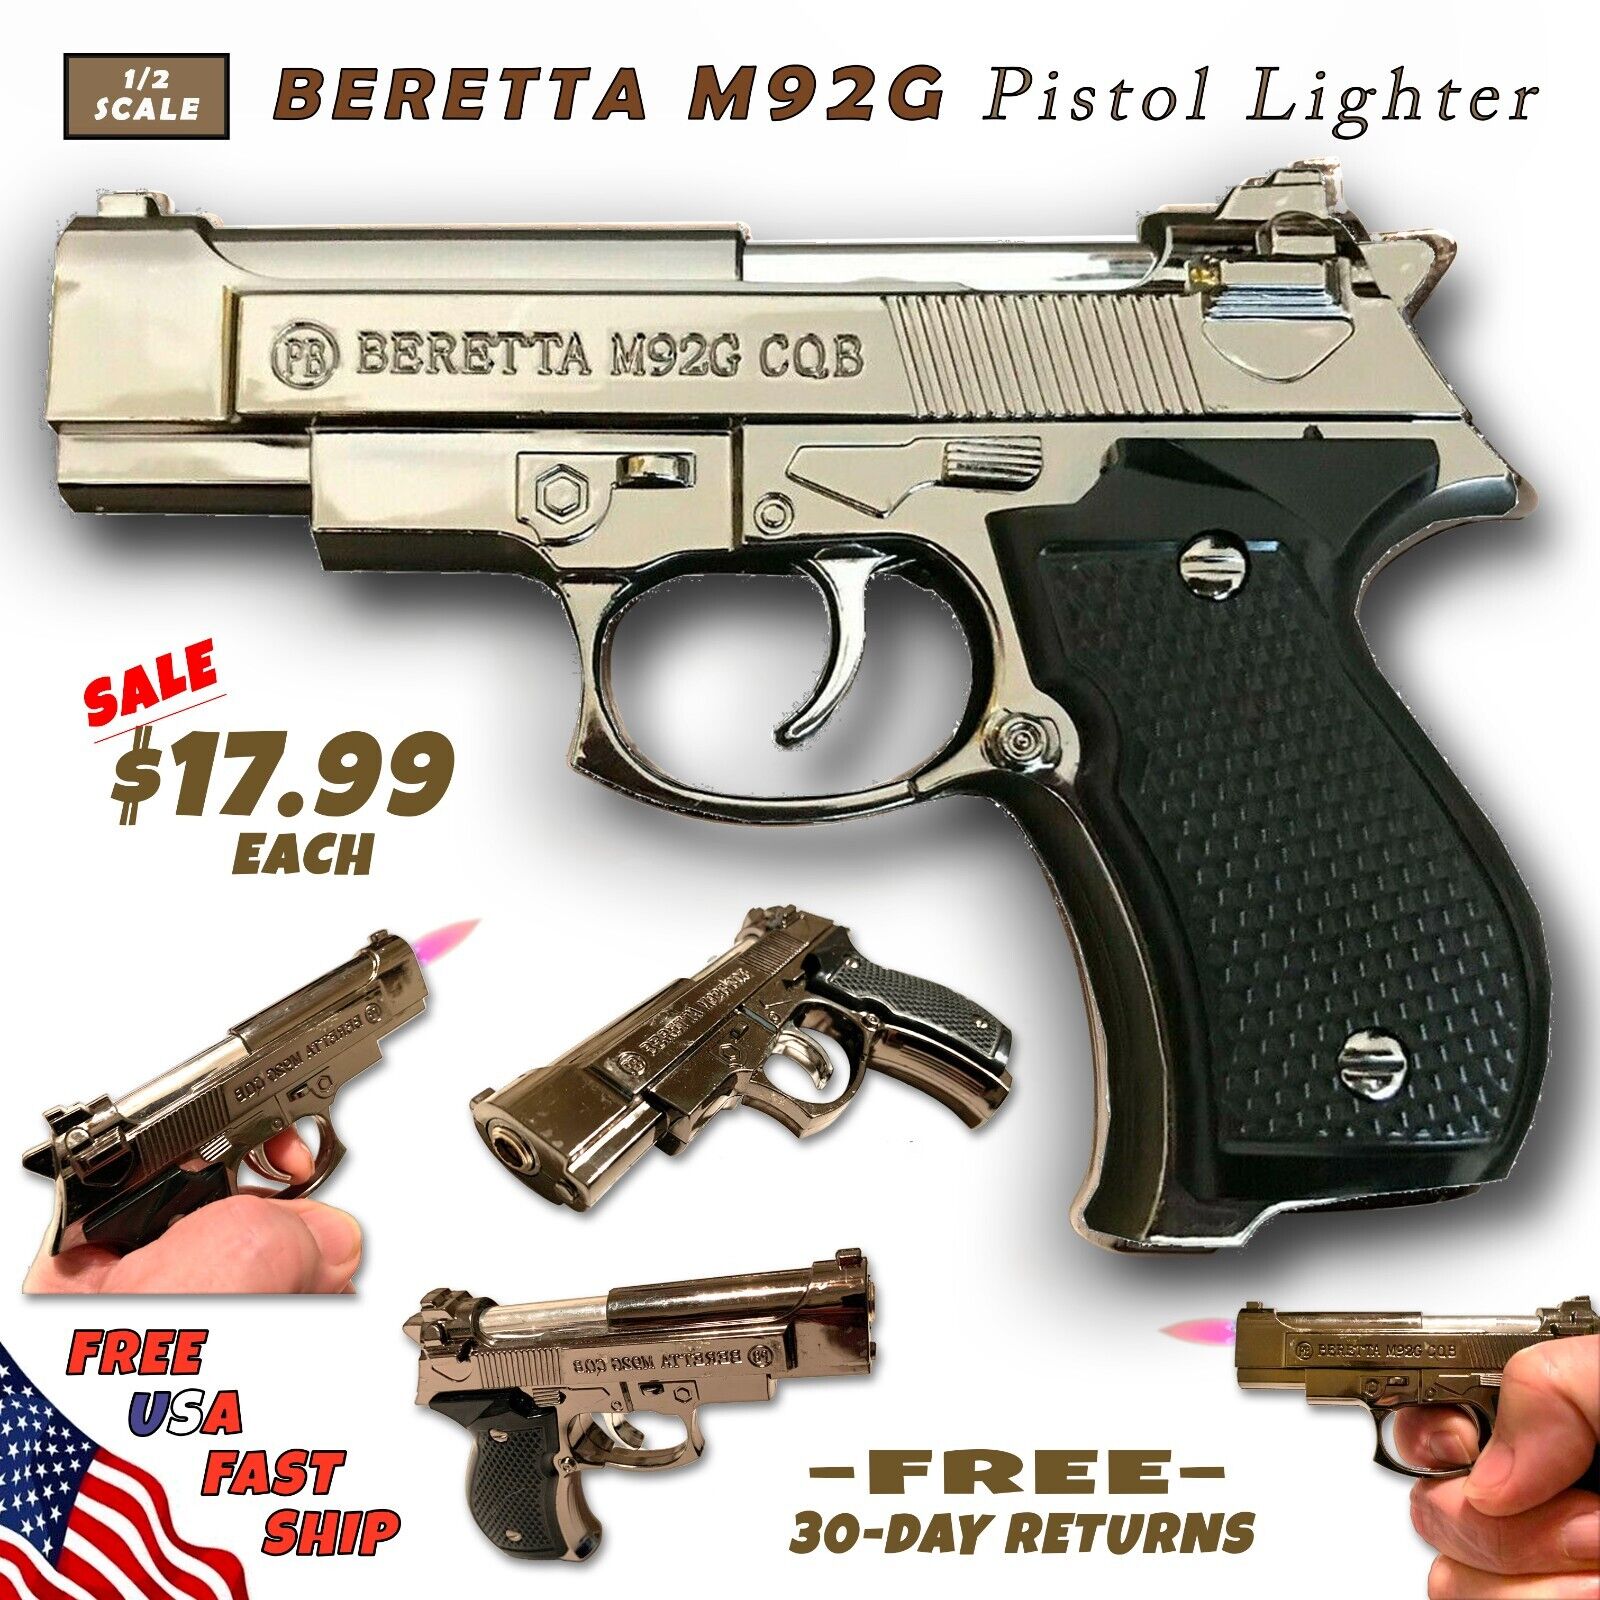 Authentic Looking Beretta M92G Jet Torch Pistol Gun Lighter - Trigger Activated